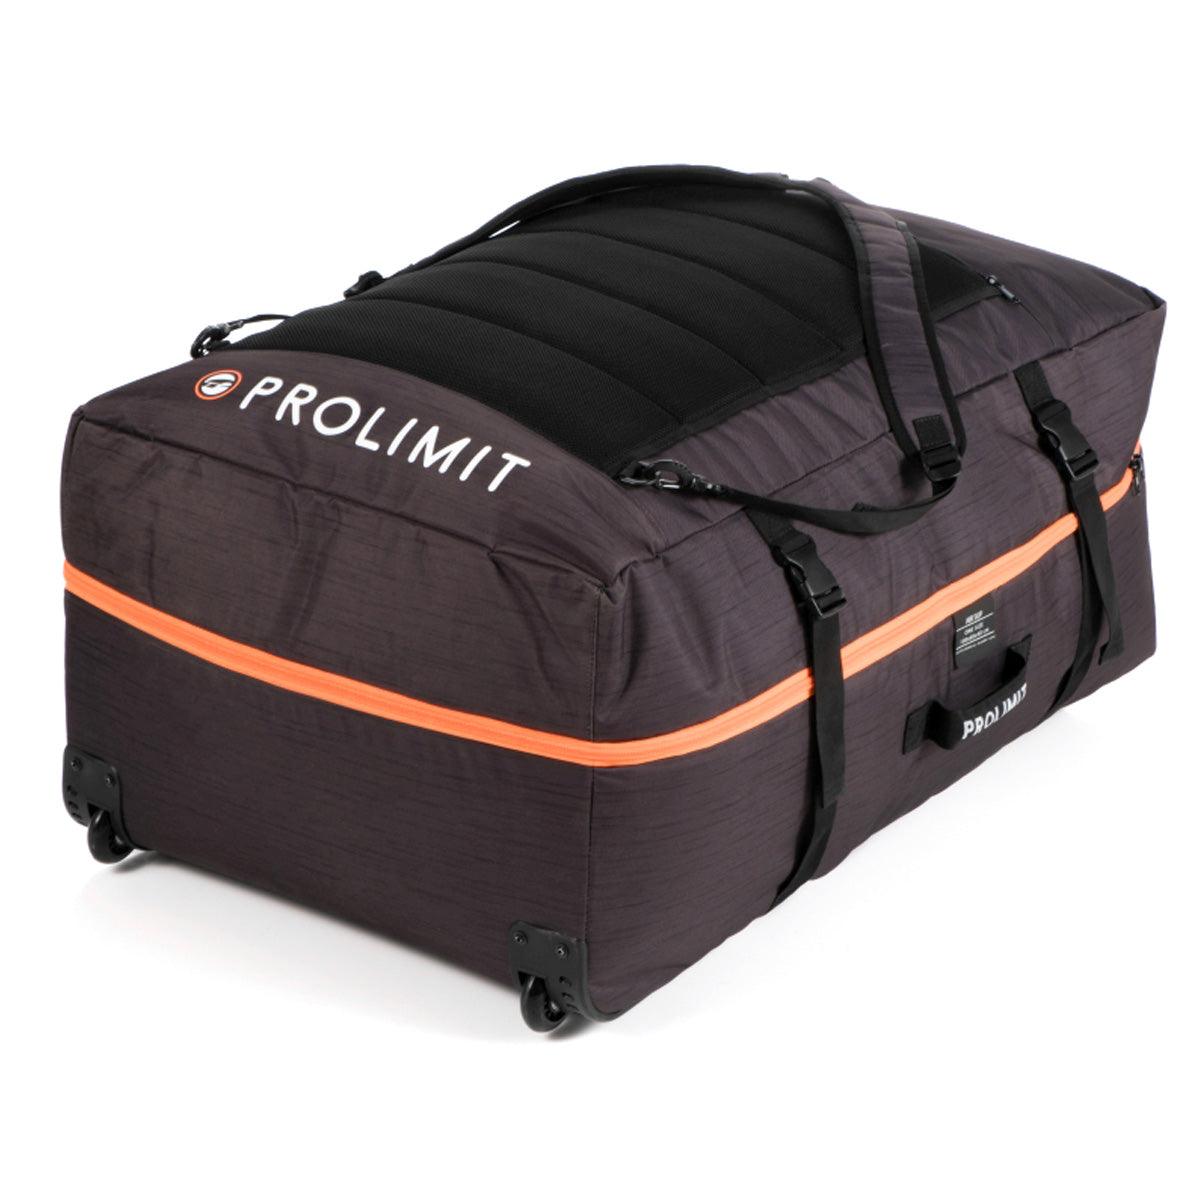 Prolimit Air Travel SUP Bag - Kiteshop.com